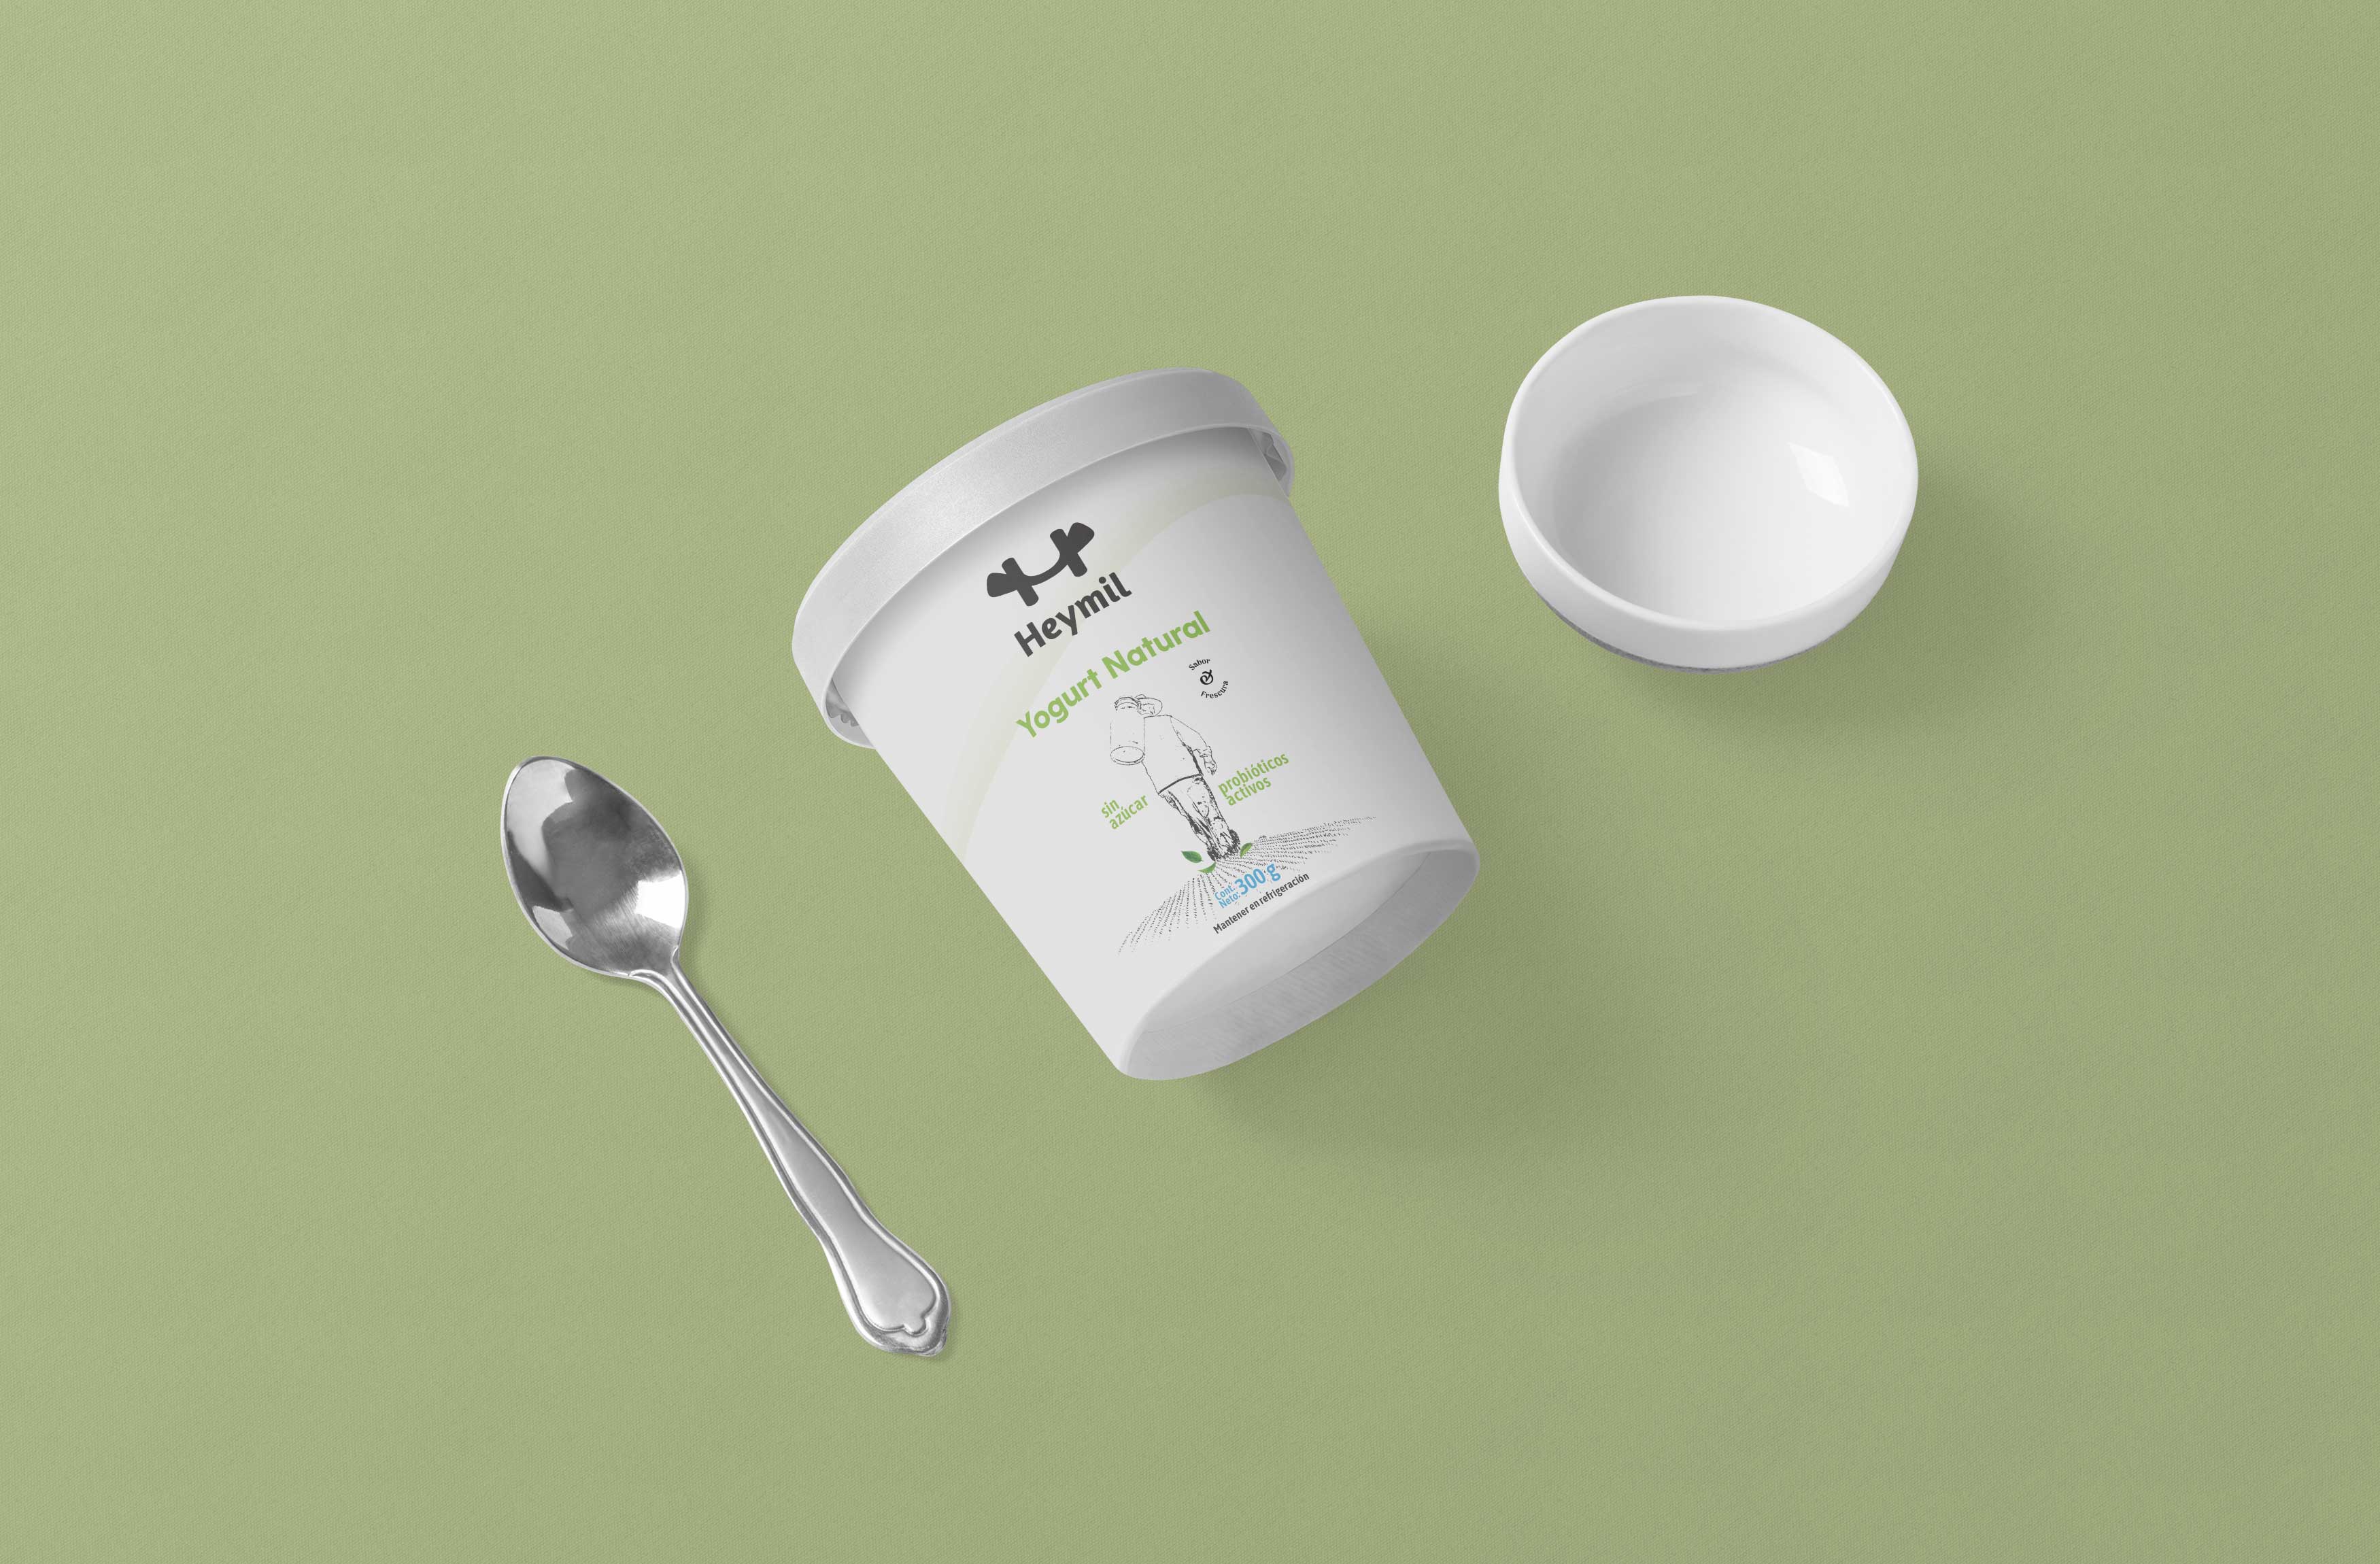 Diseño de etiquetas - Yogurt griego - Packaging - Soluciones de Firstrein